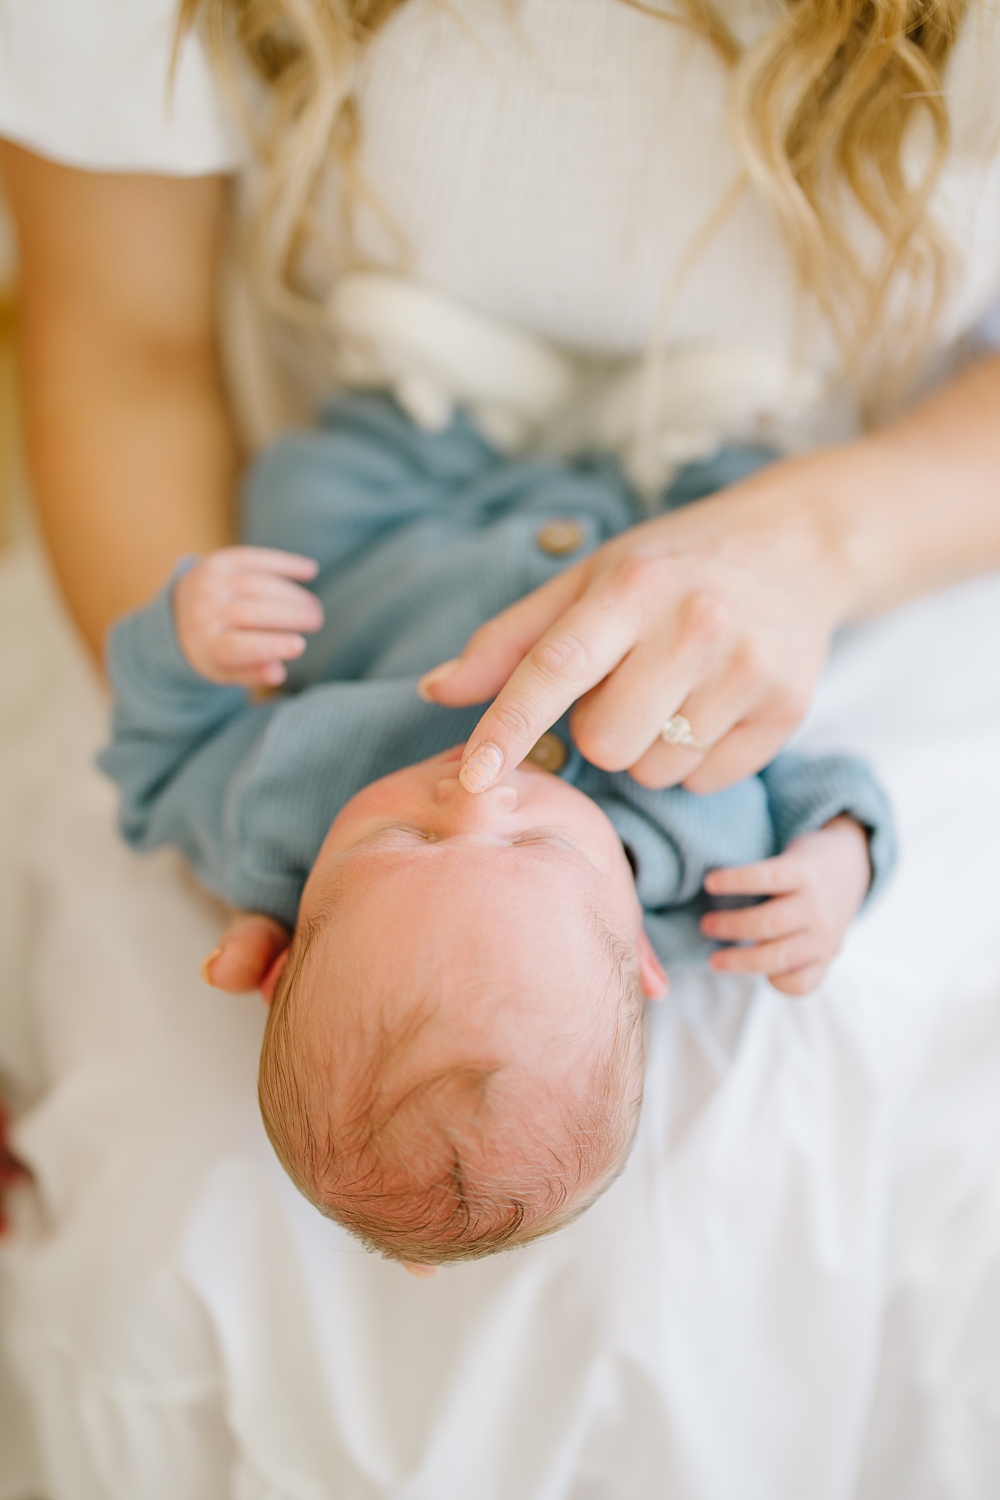 Herriman Newborn Photographer | Baby Boy